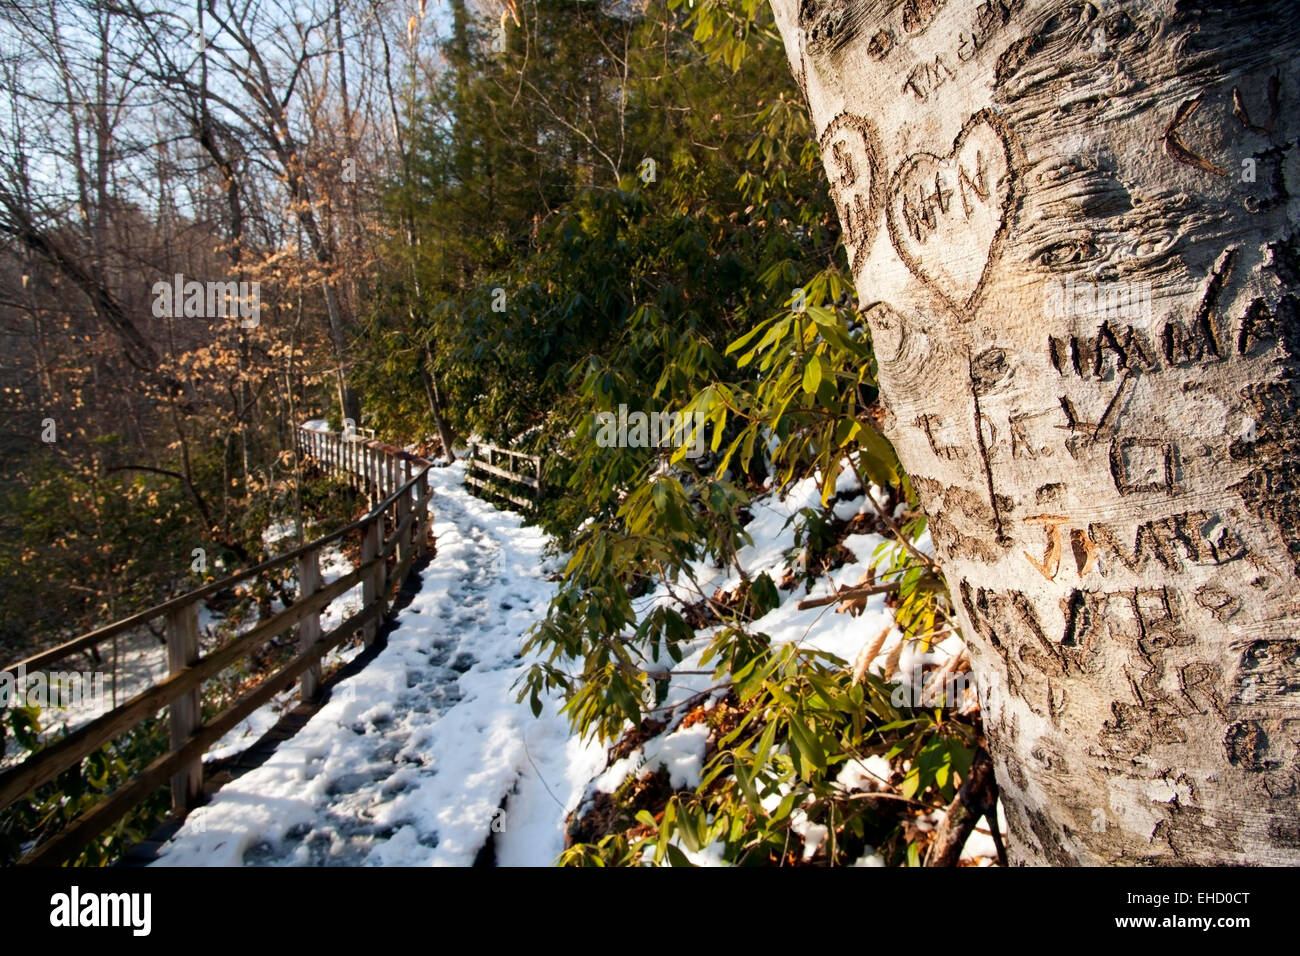 Close-up of tree carvings / graffiti on Andy Cove Trail - Pisgah National Forest, near Brevard, North Carolina, USA Stock Photo